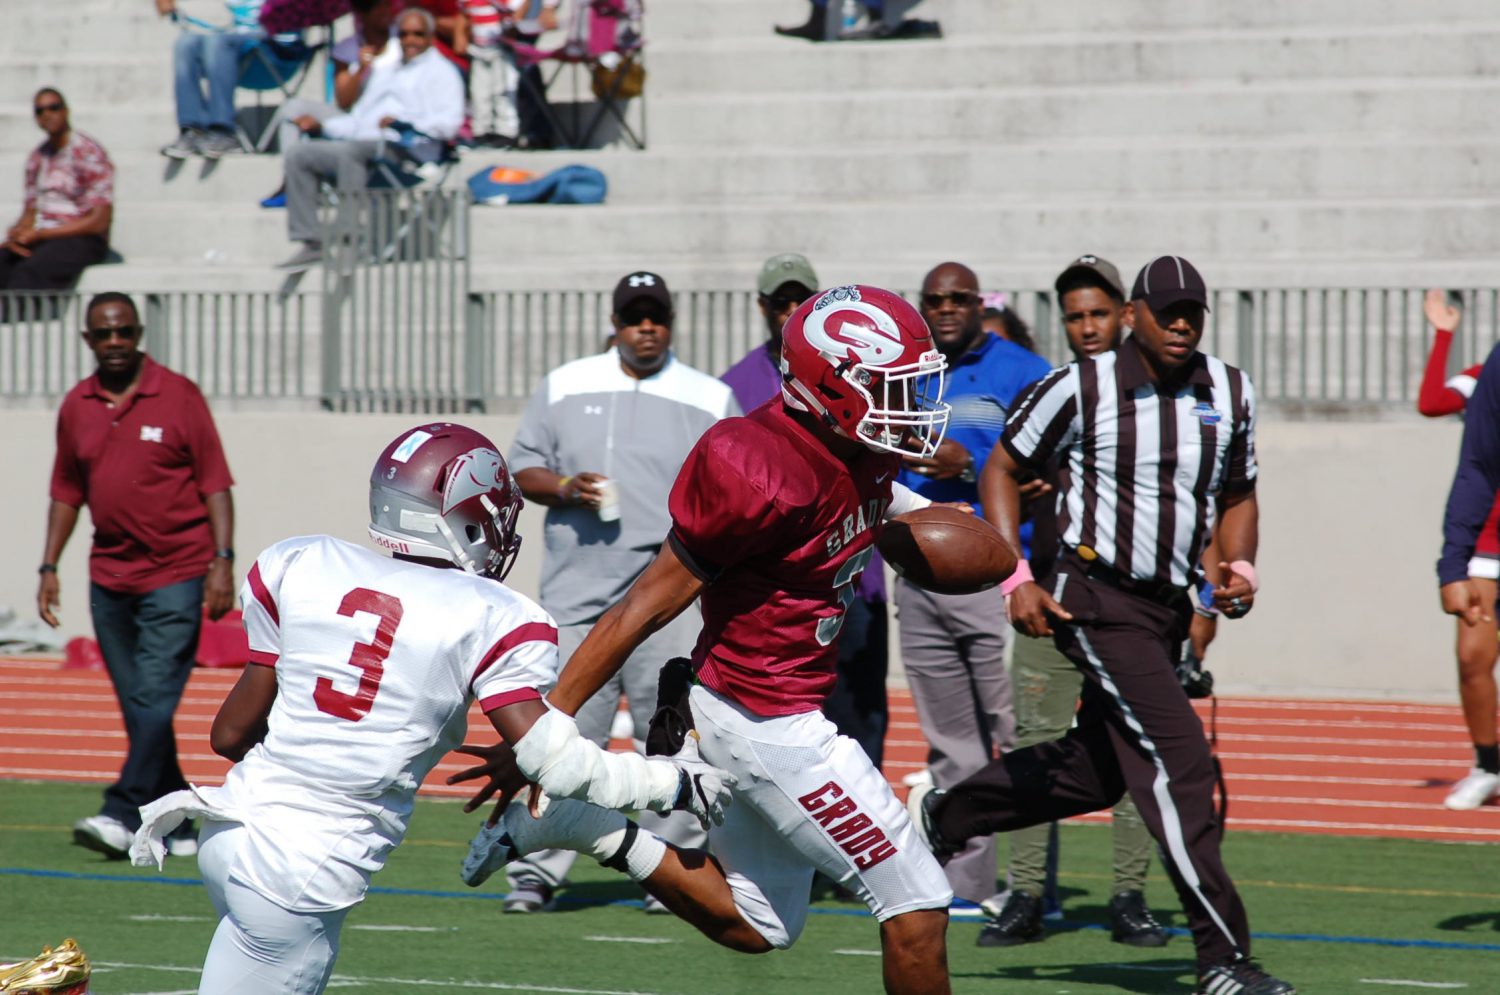 Senior quarterback Caylin Newton runs into the end zone for a 5-yard touchdown.